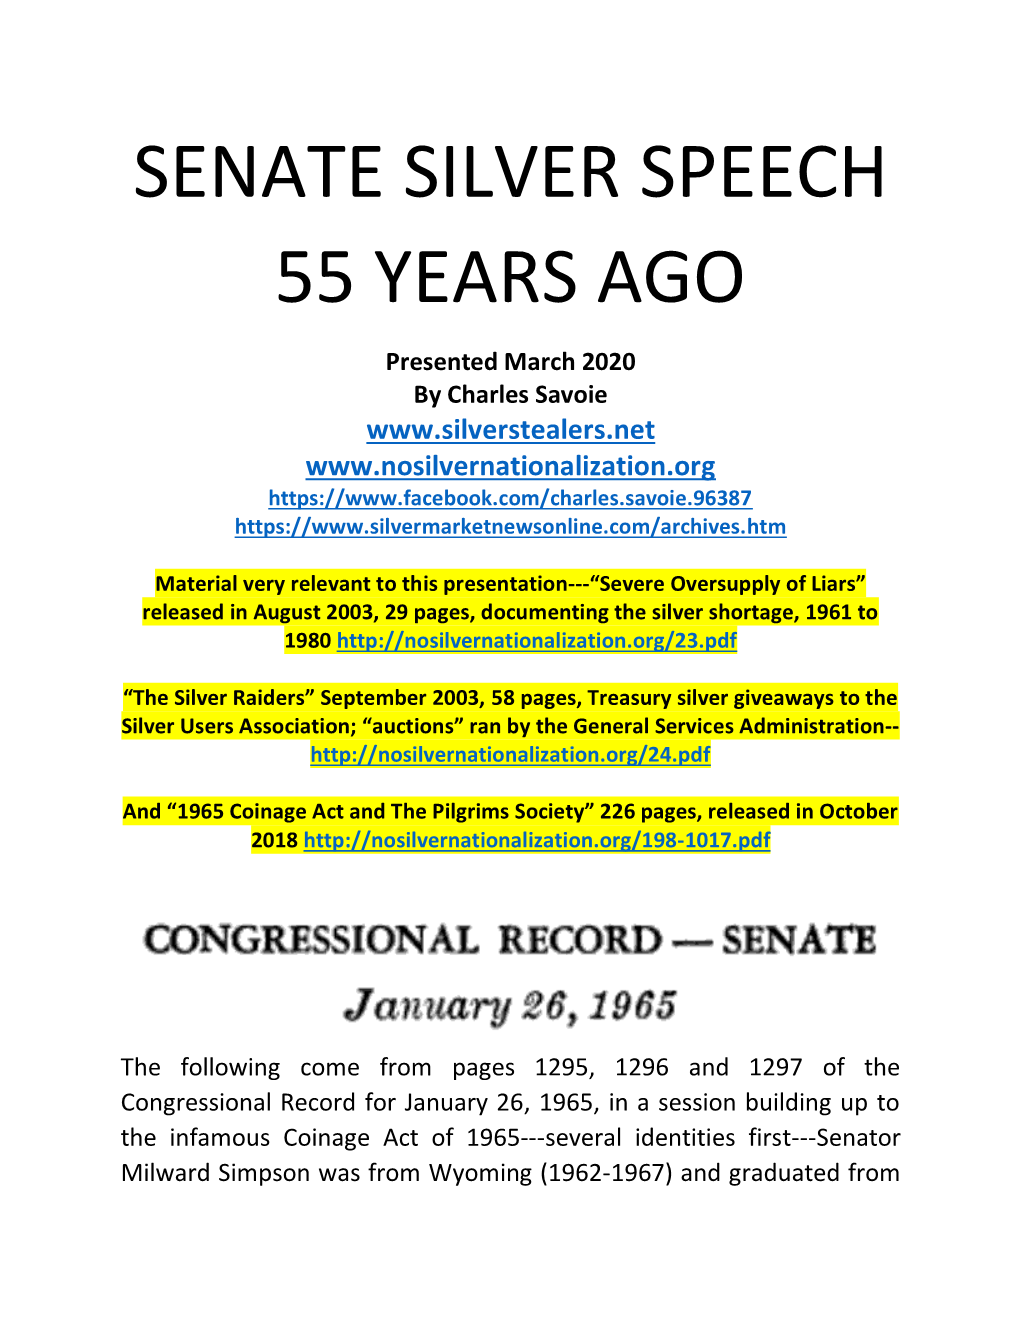 Senate Silver Speech 55 Years Ago